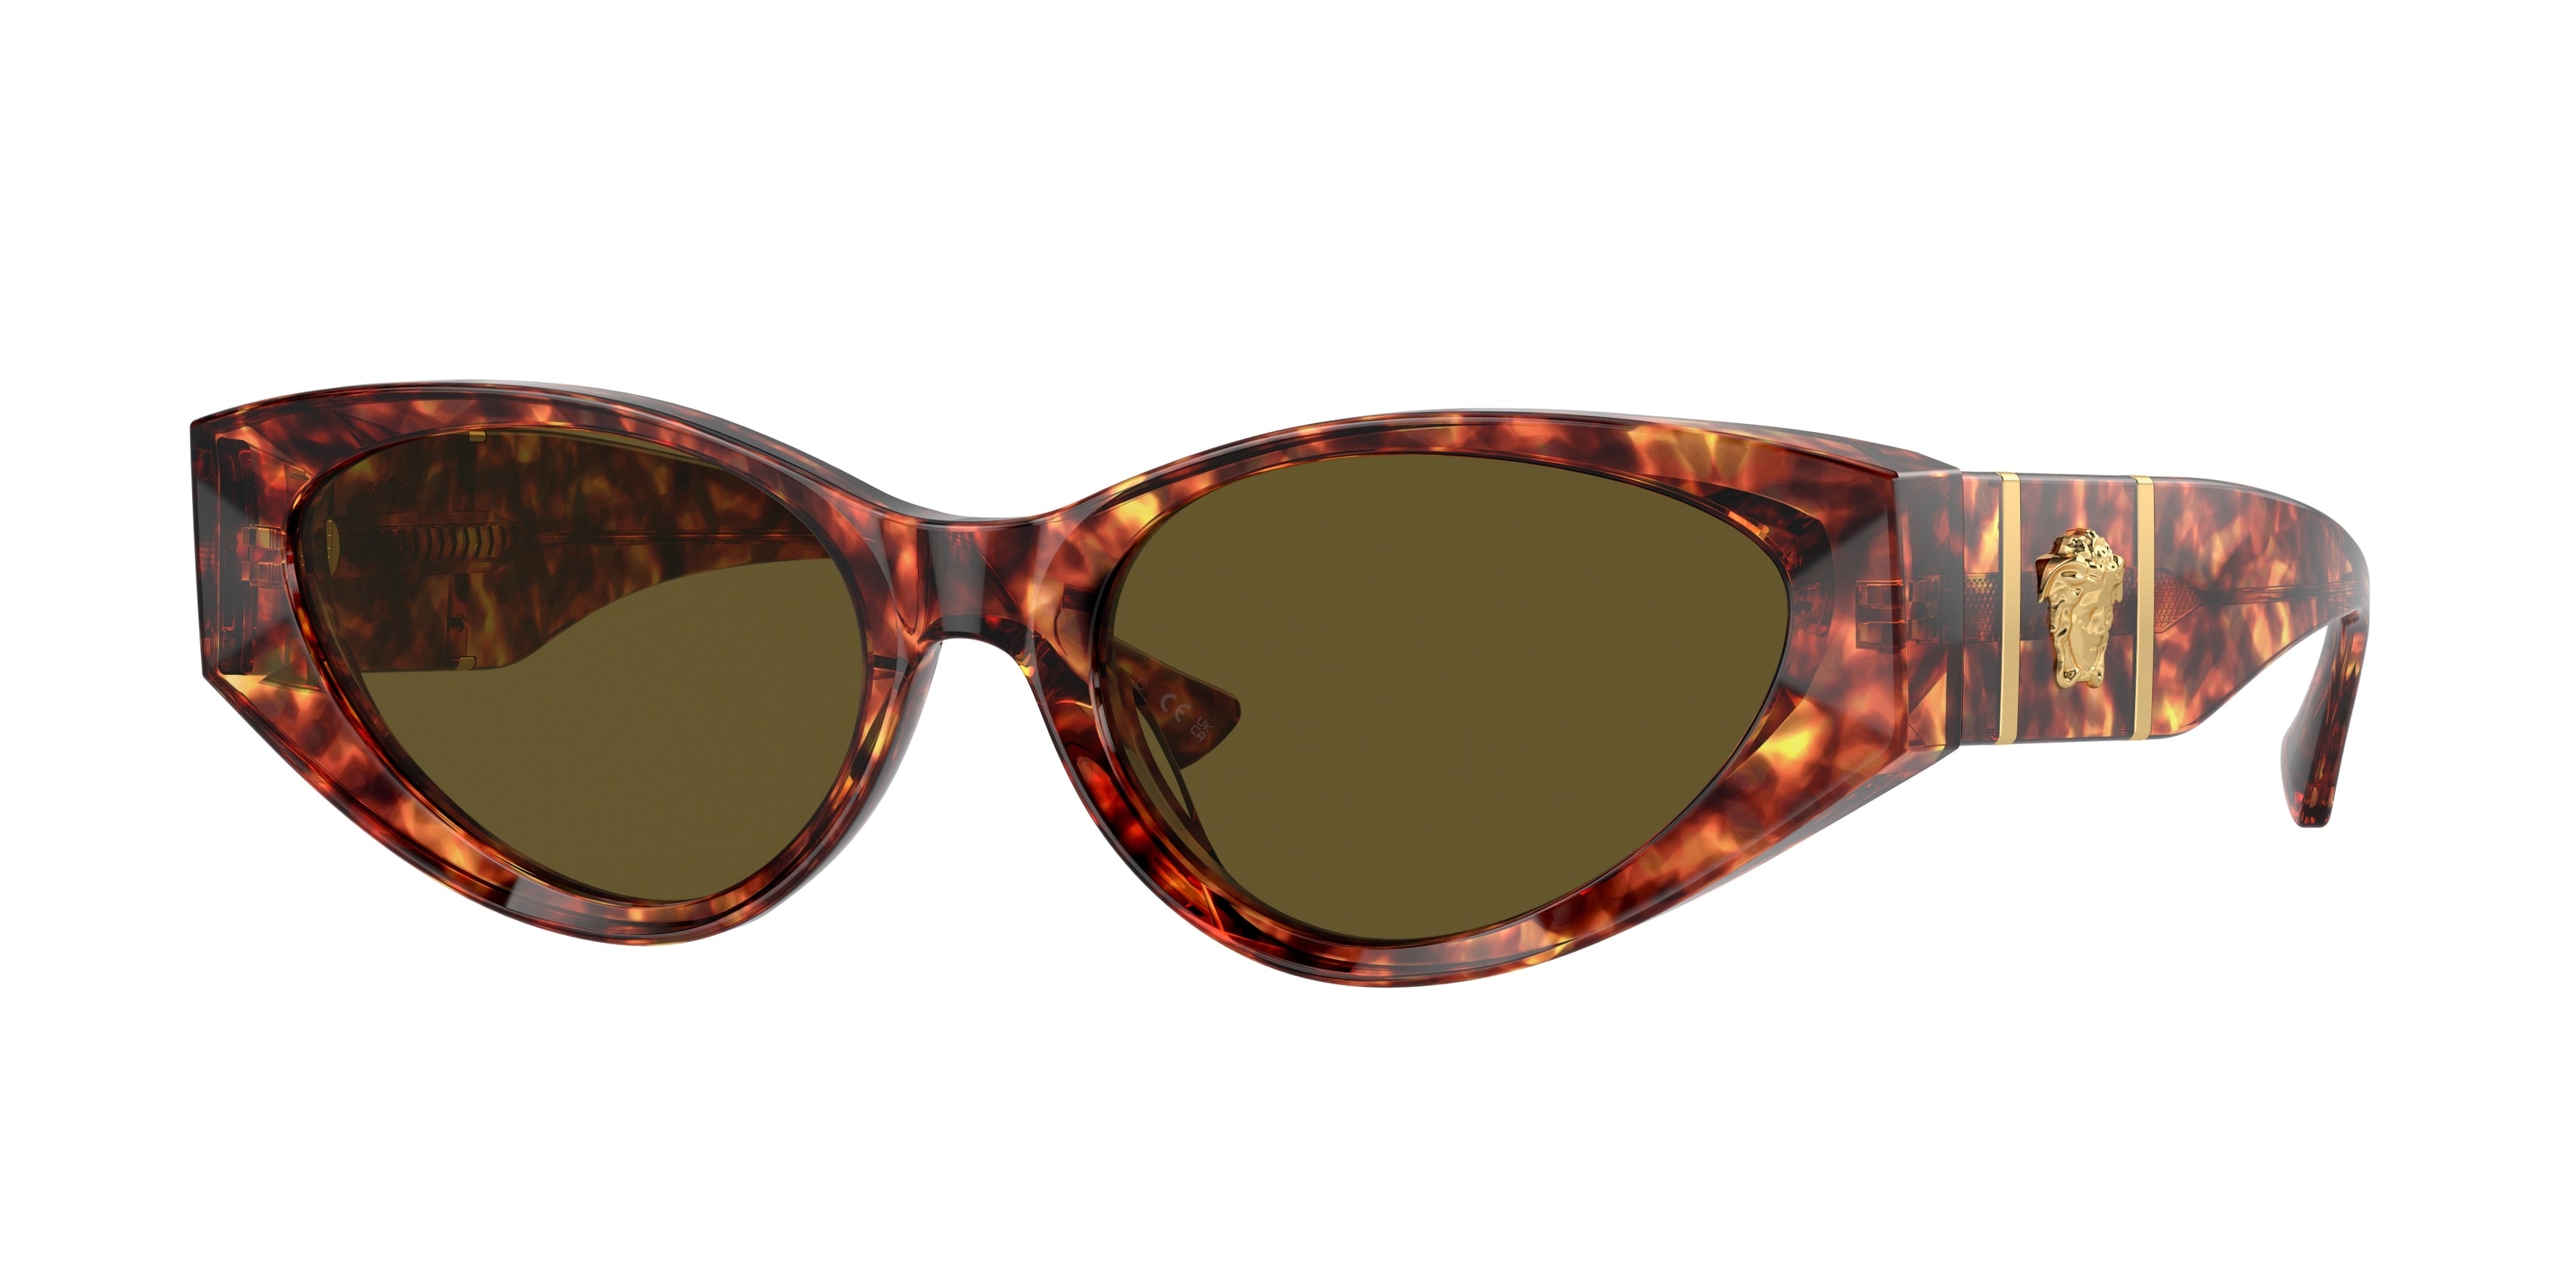 Versace VE4454 Cat Eye Sunglasses  543773-Havana 55-140-18 - Color Map Tortoise